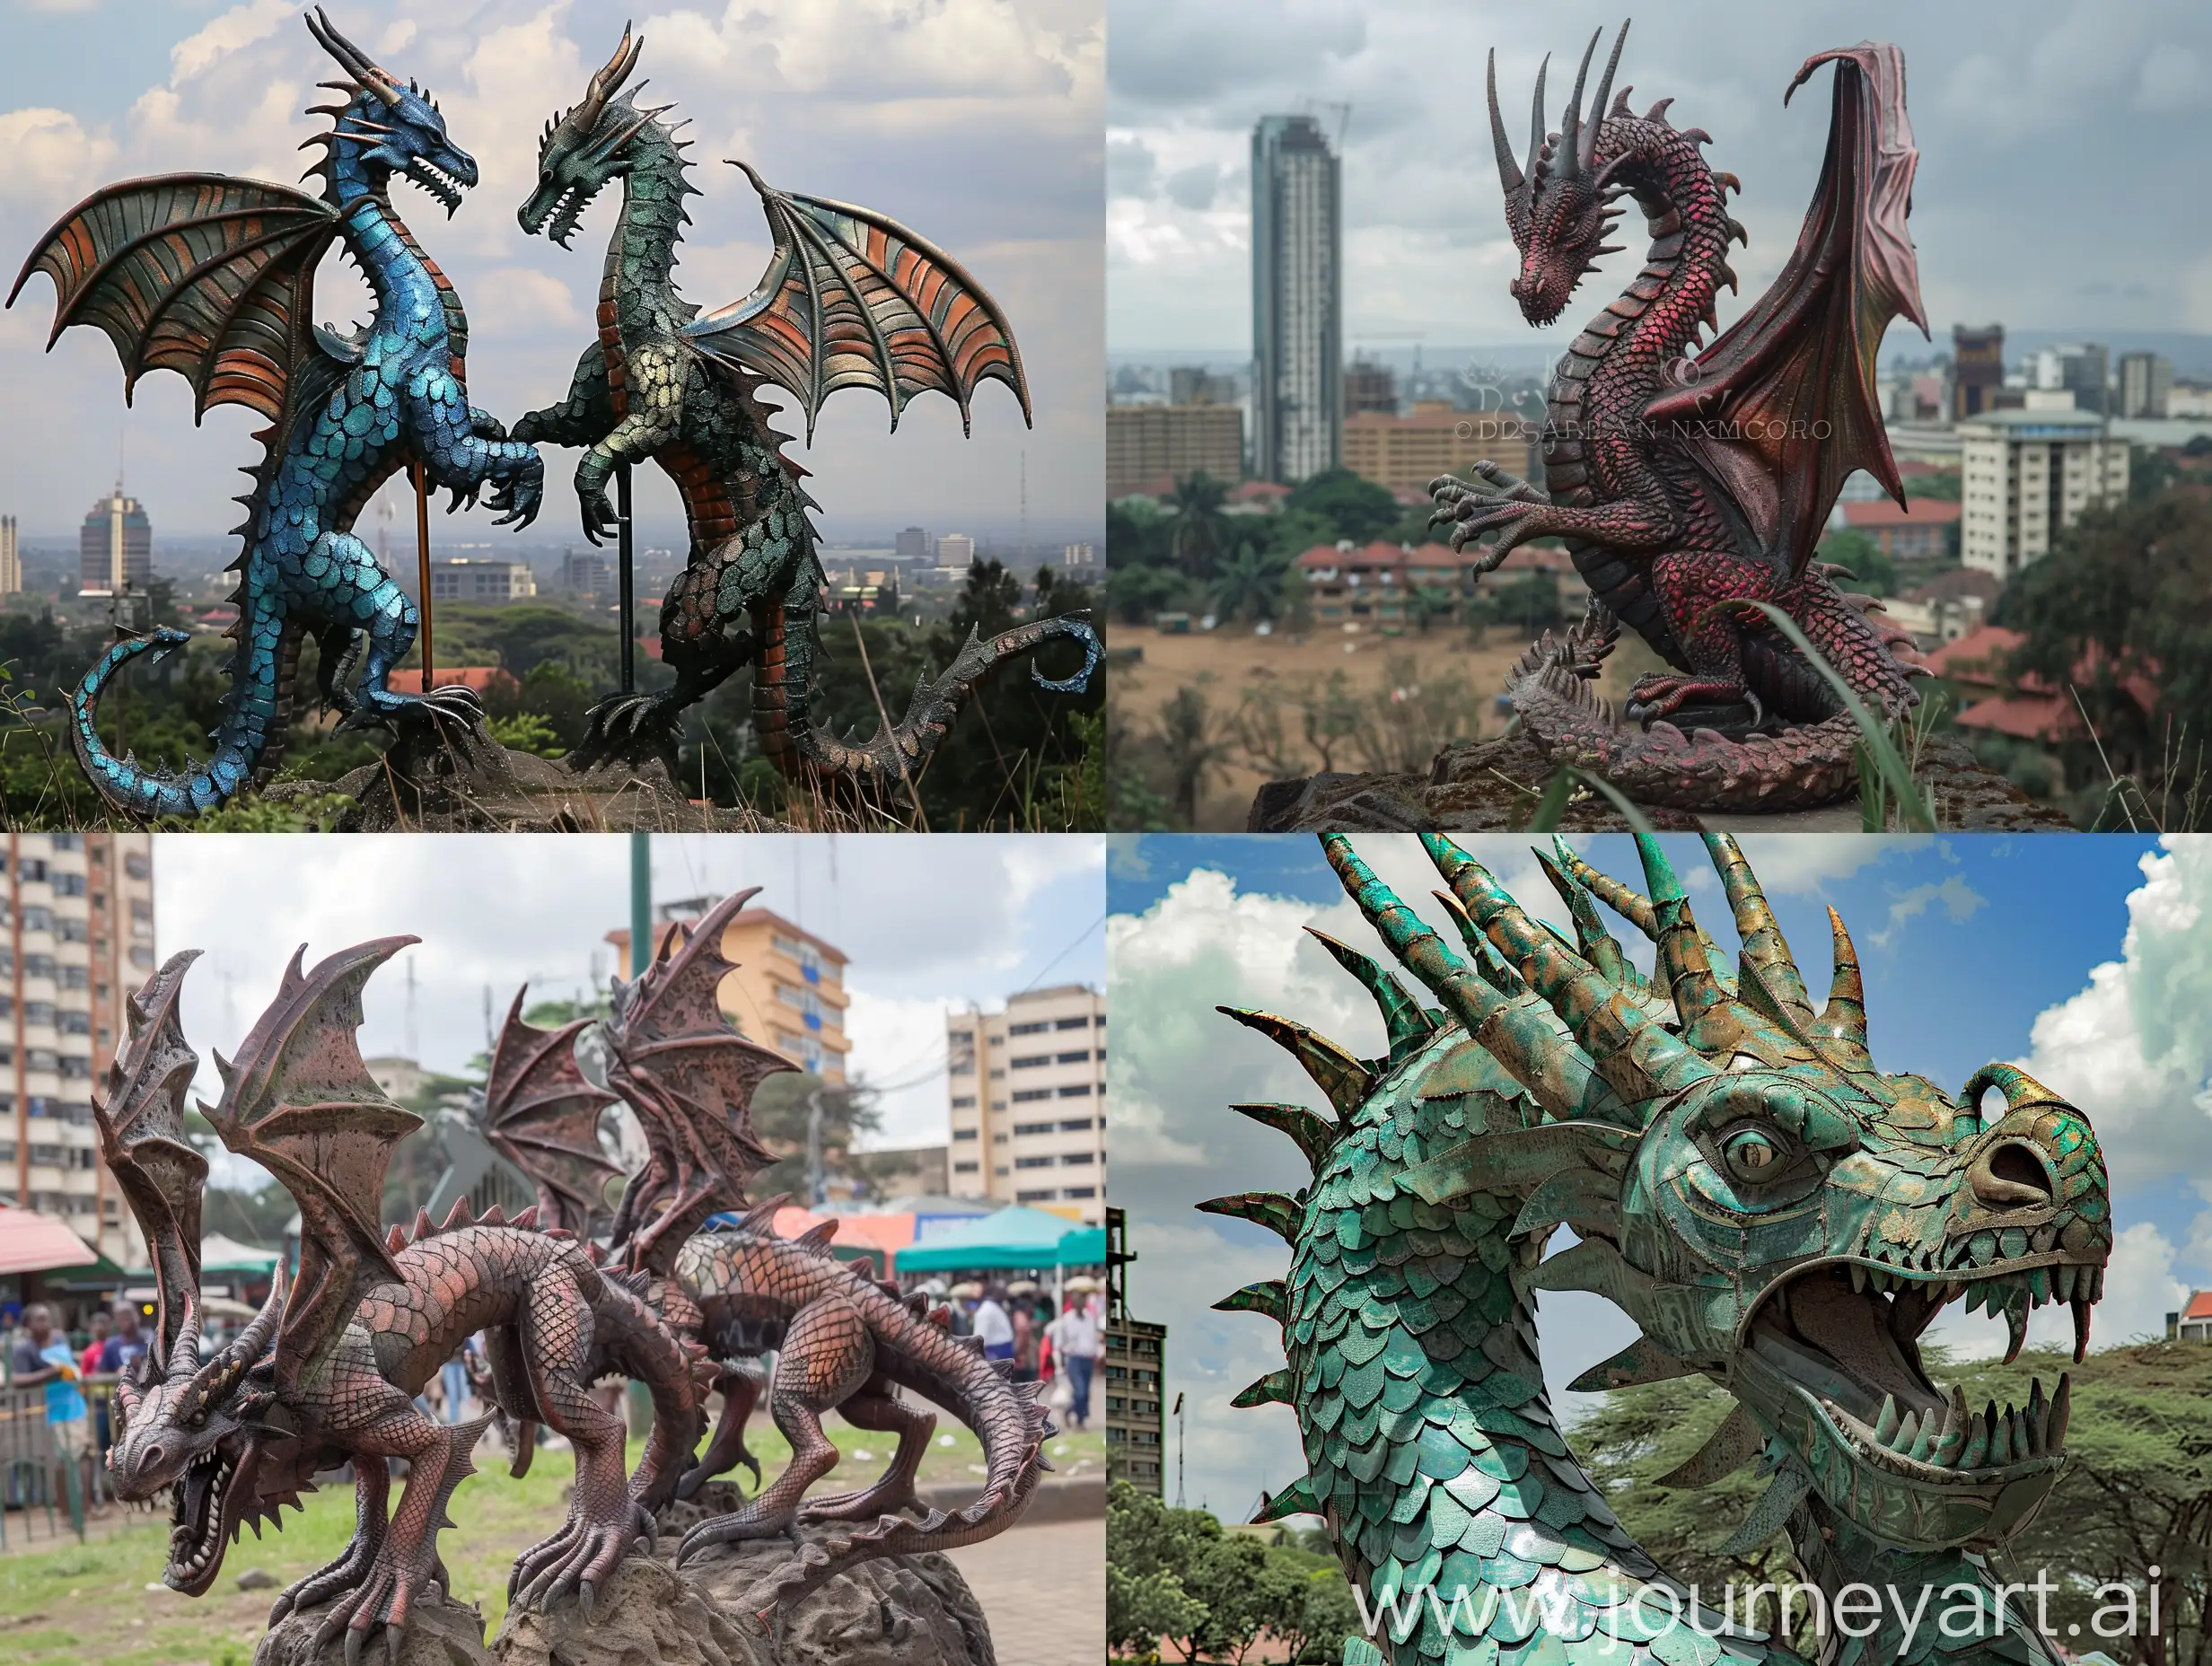 DRAGONS IN NAIROBI